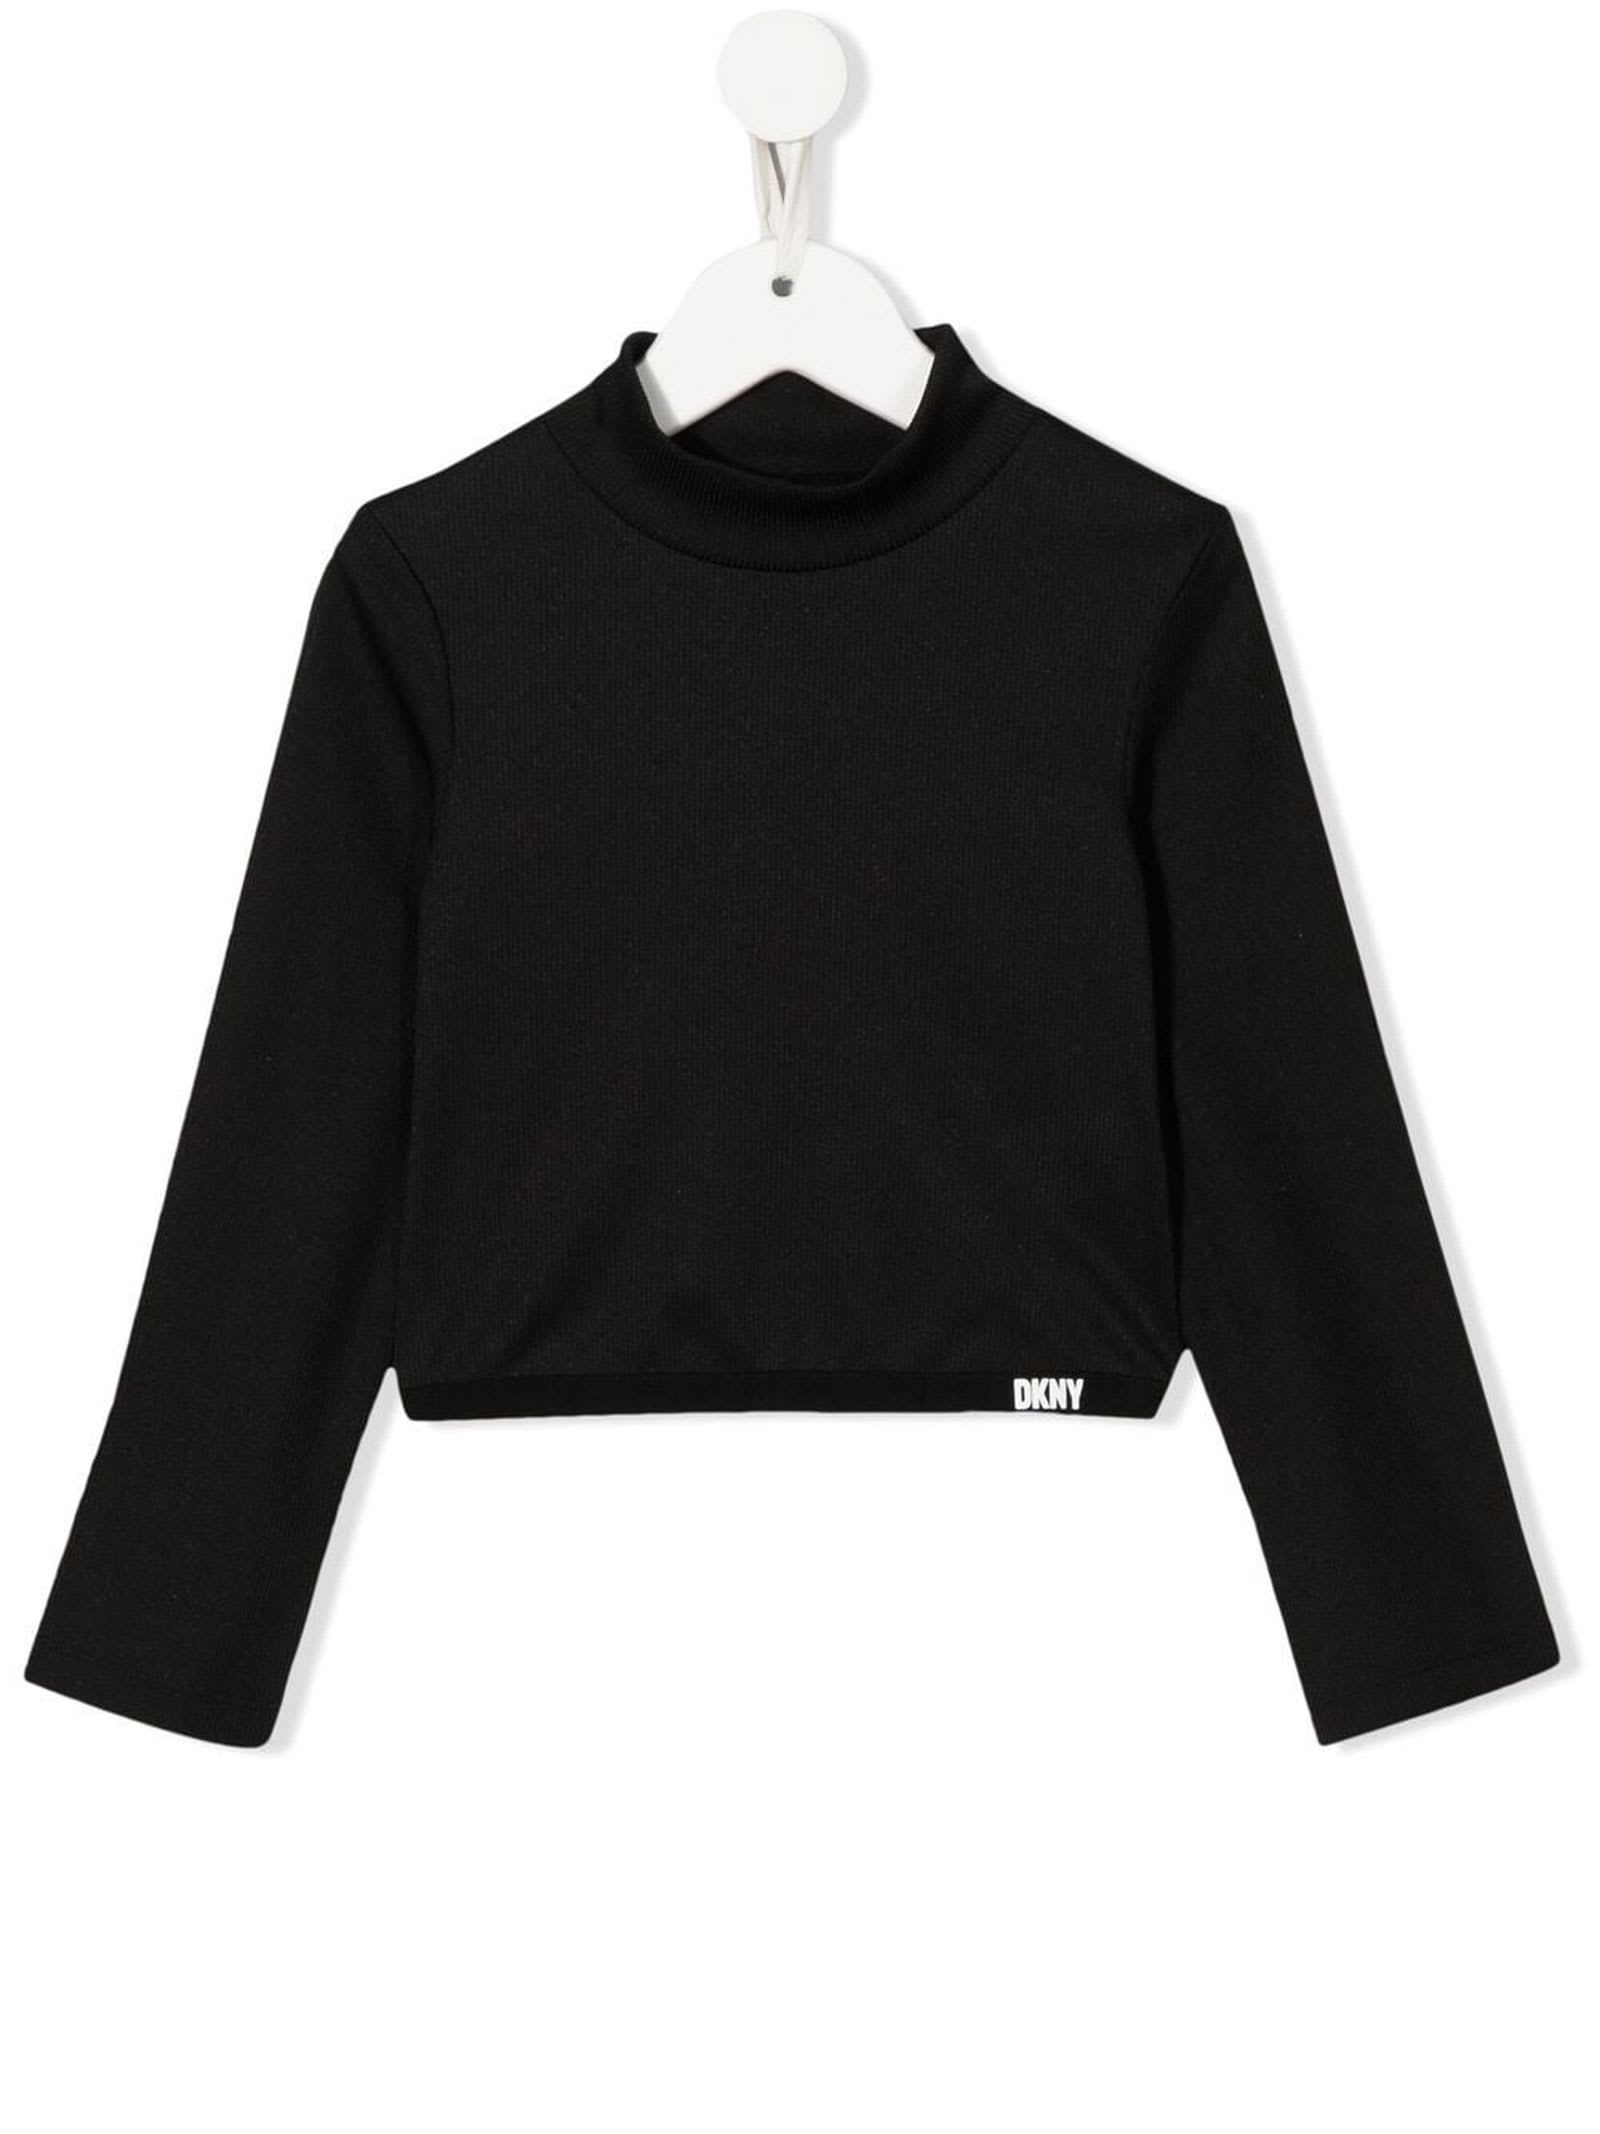 DKNY Black Polyester Sweatshirt